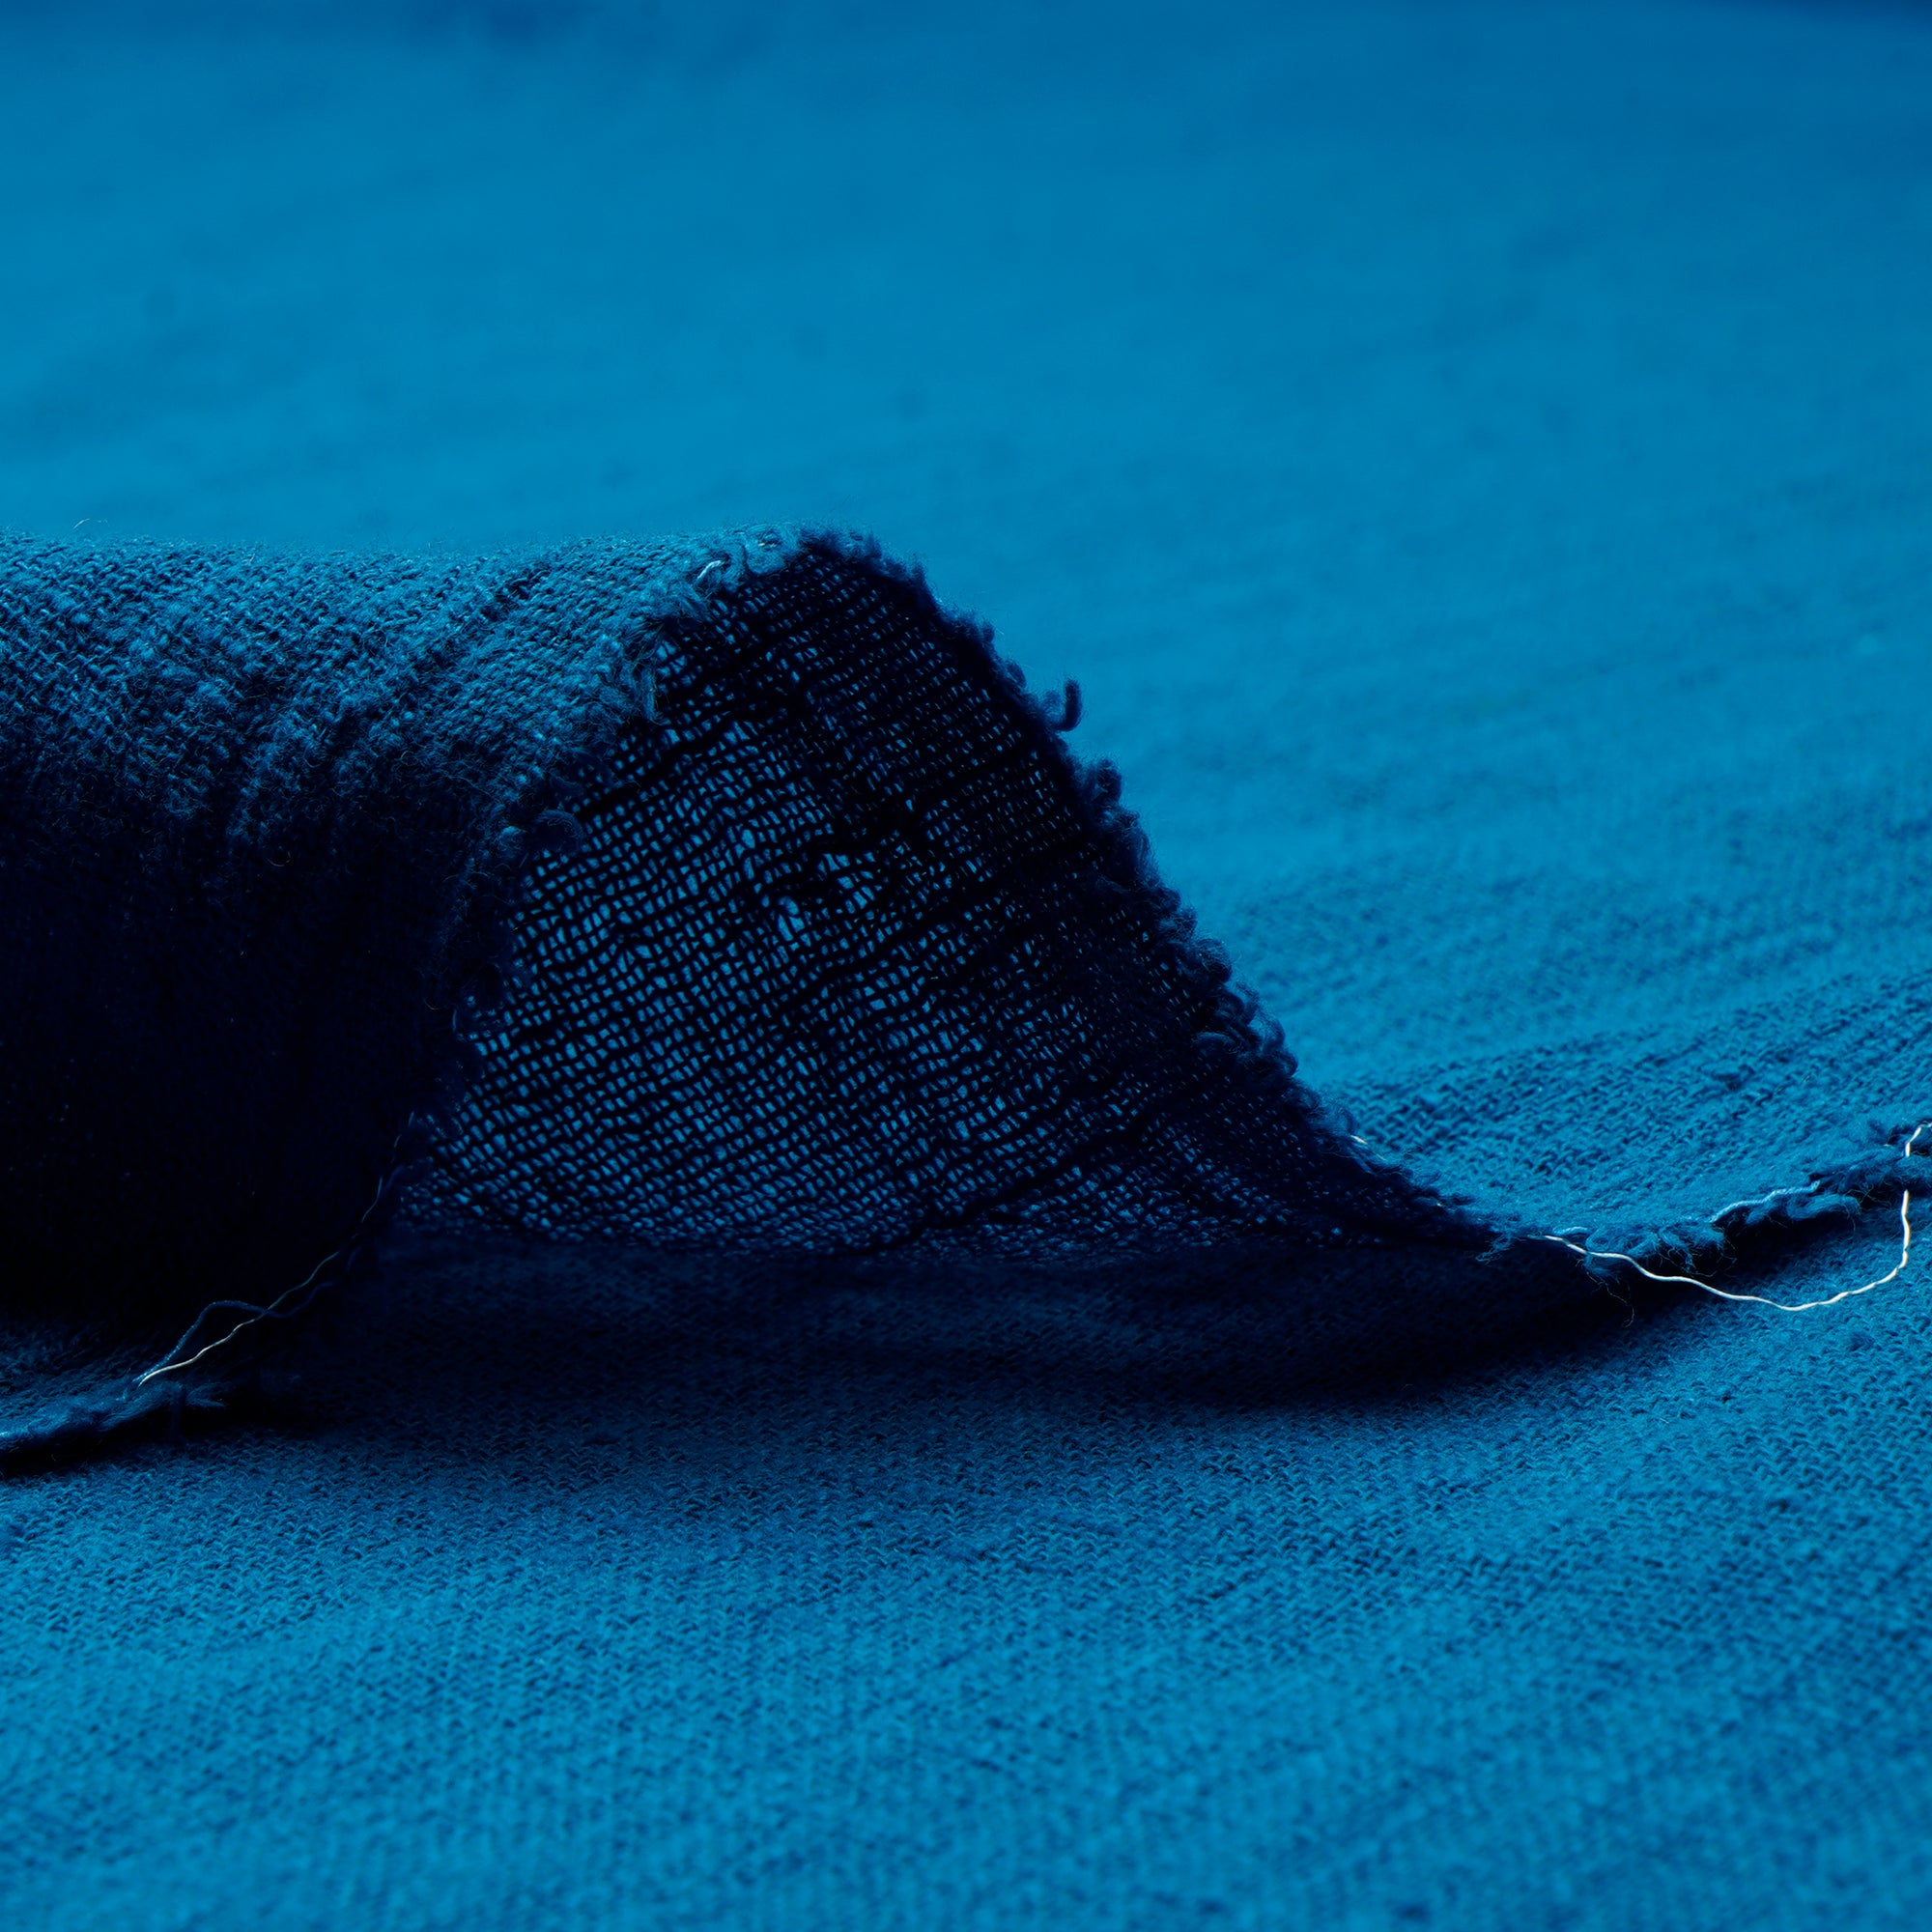 Methyl Blue Mill Dyed Cotton Matka Slub Fabric